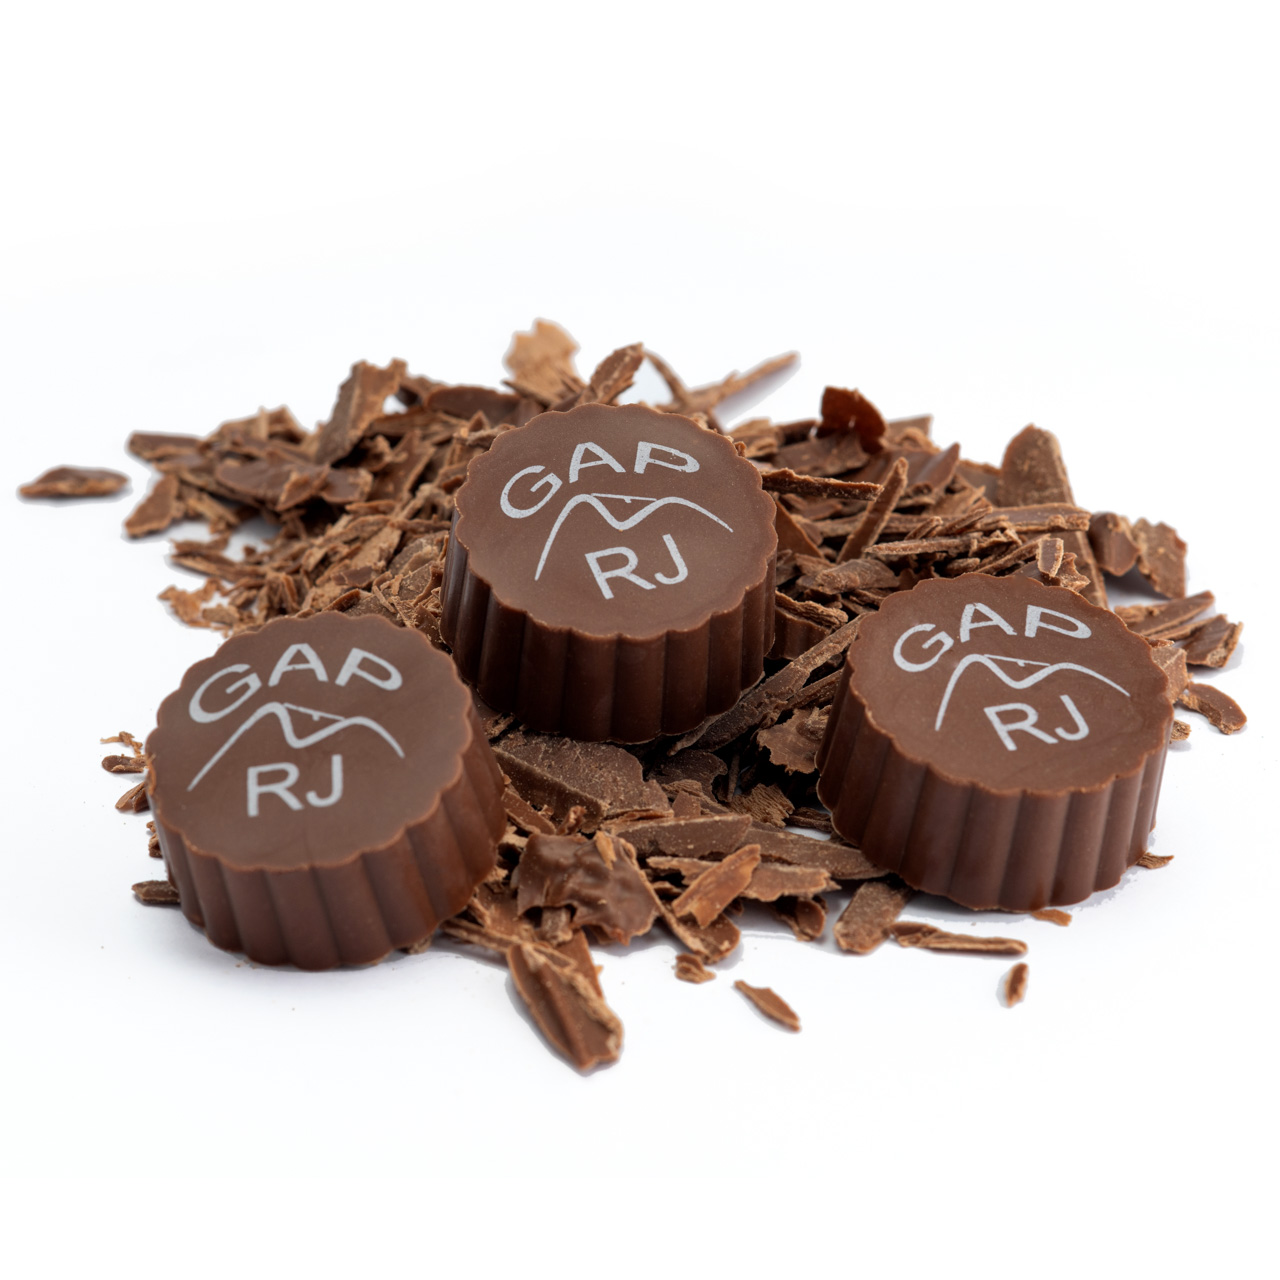 GAP RJ - Ana Foster Chocolates